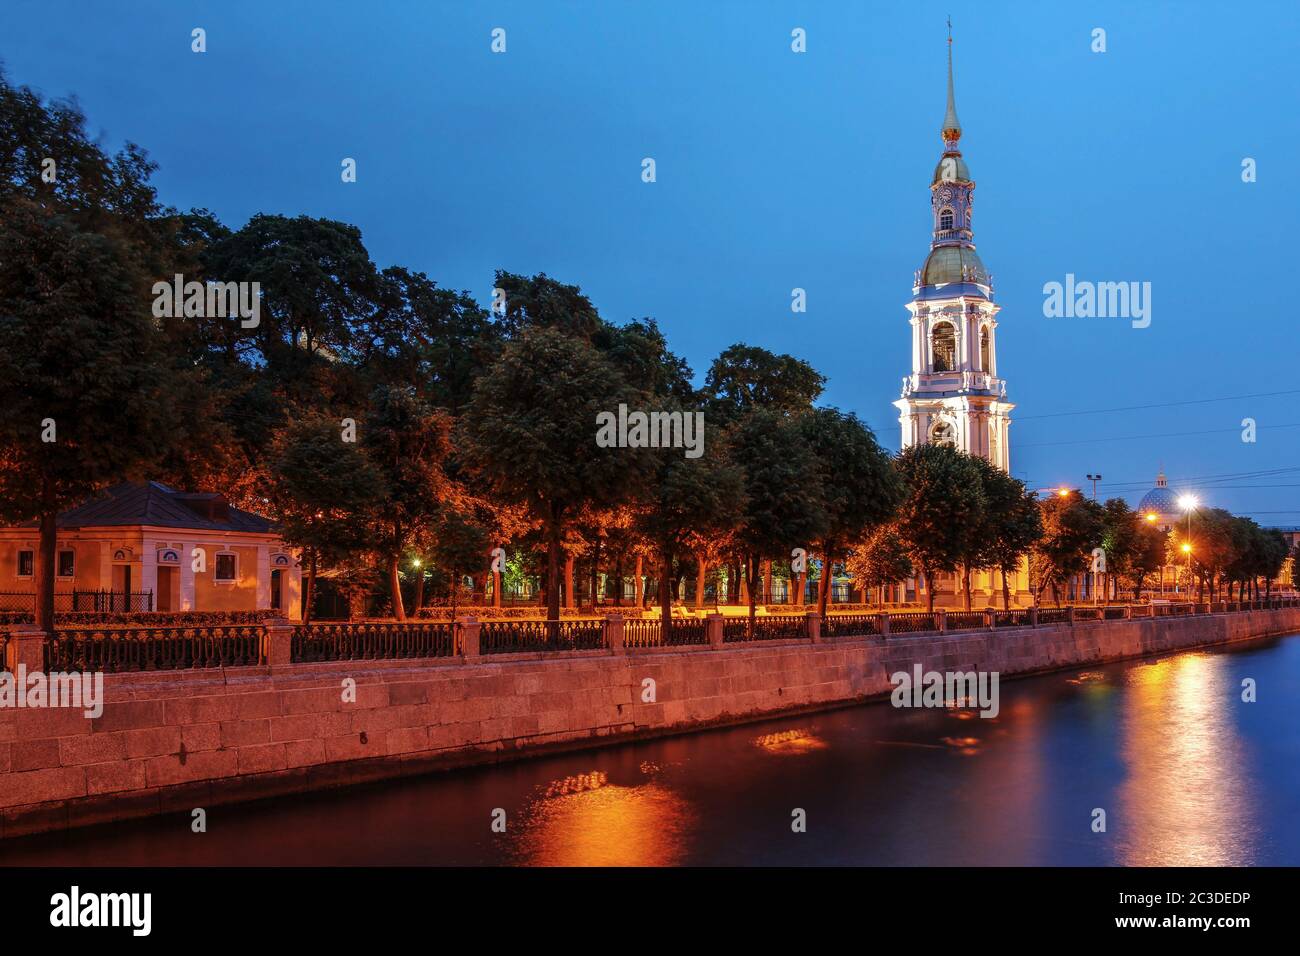 Nachtszene mit dem Glockenturm der Nikolaikirche in Sankt Petersburg, Russland entlang des Krjukow-Kanals. Stockfoto